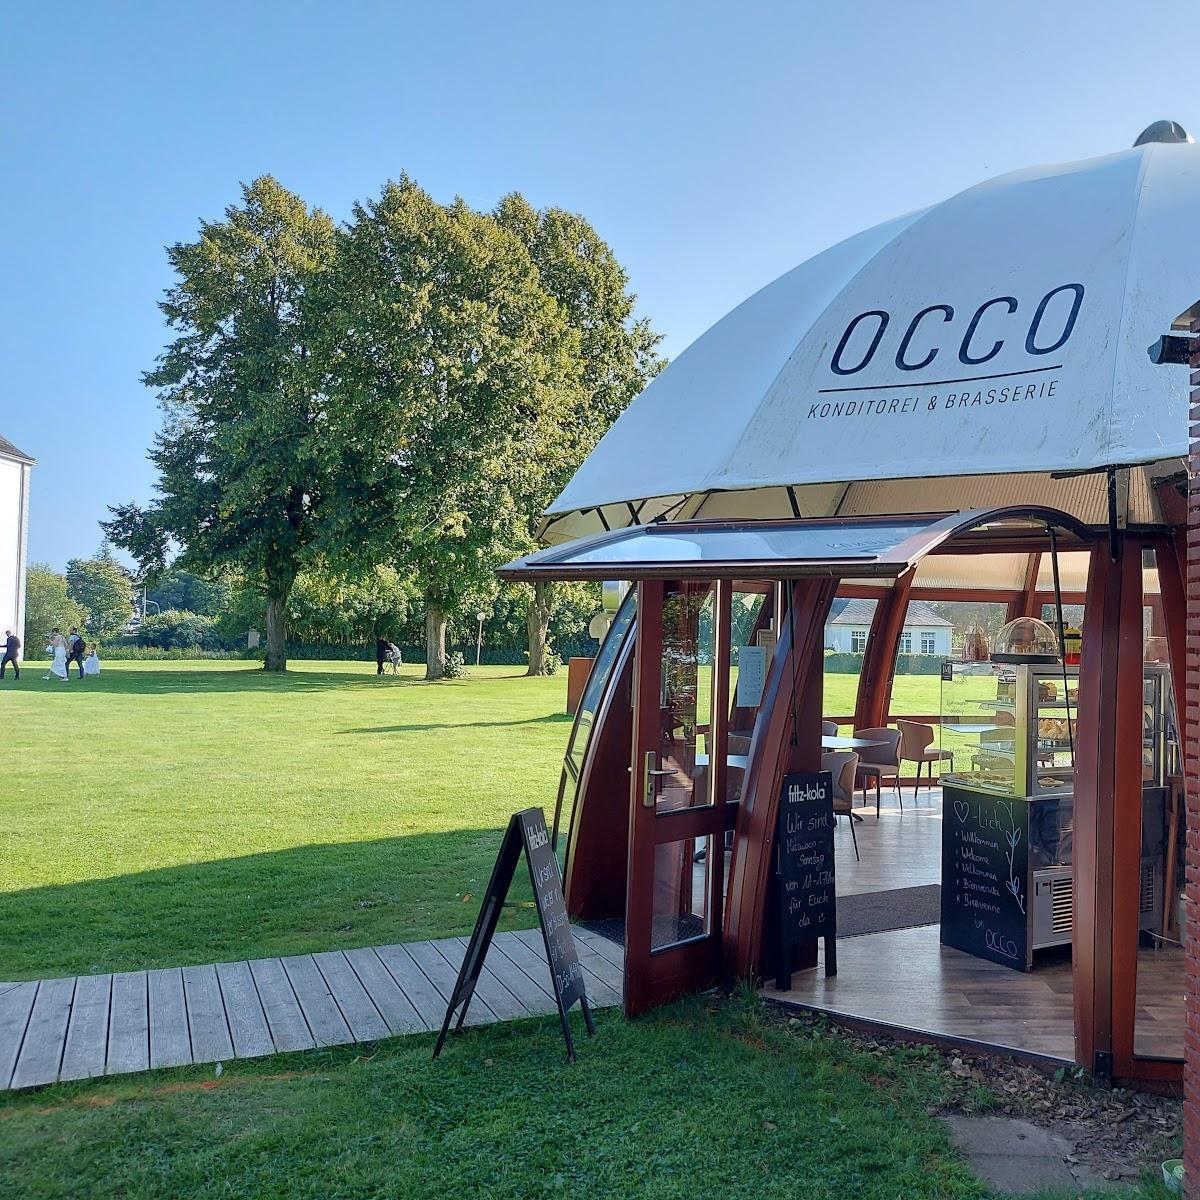 Restaurant "Occo" in Schleswig